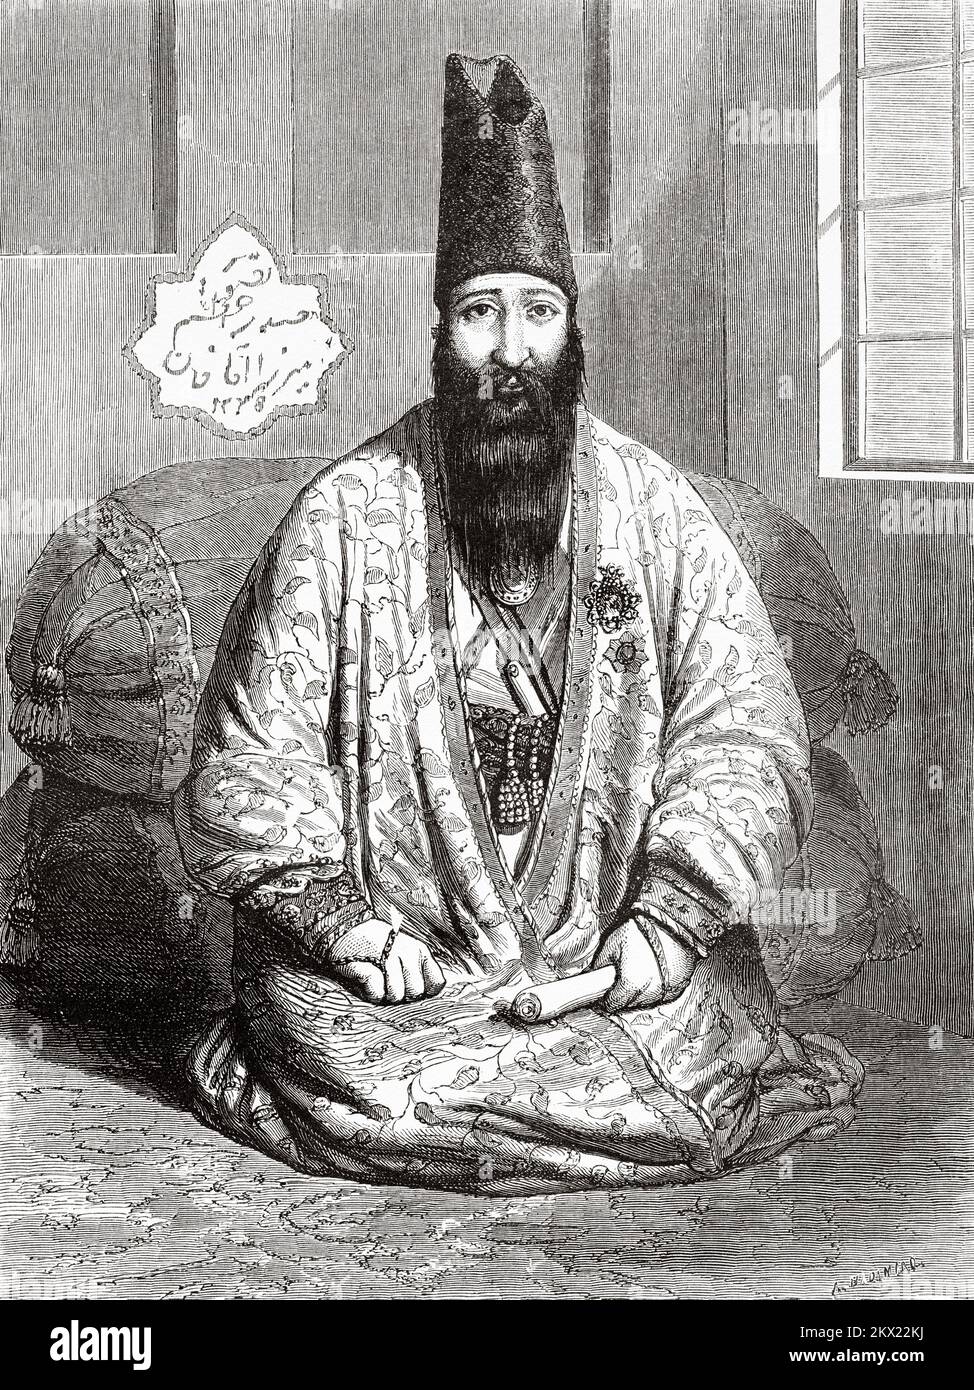 Portrait de Haji Mirza Abbas Iravani était un politicien iranien qui a servi de grand vizier du roi qajar Mohammad Shah Qajar. Mashhad. Province de Razavi Khorasan, Iran. Voyage à Khorassan par N de KhanikoF 1858 Banque D'Images